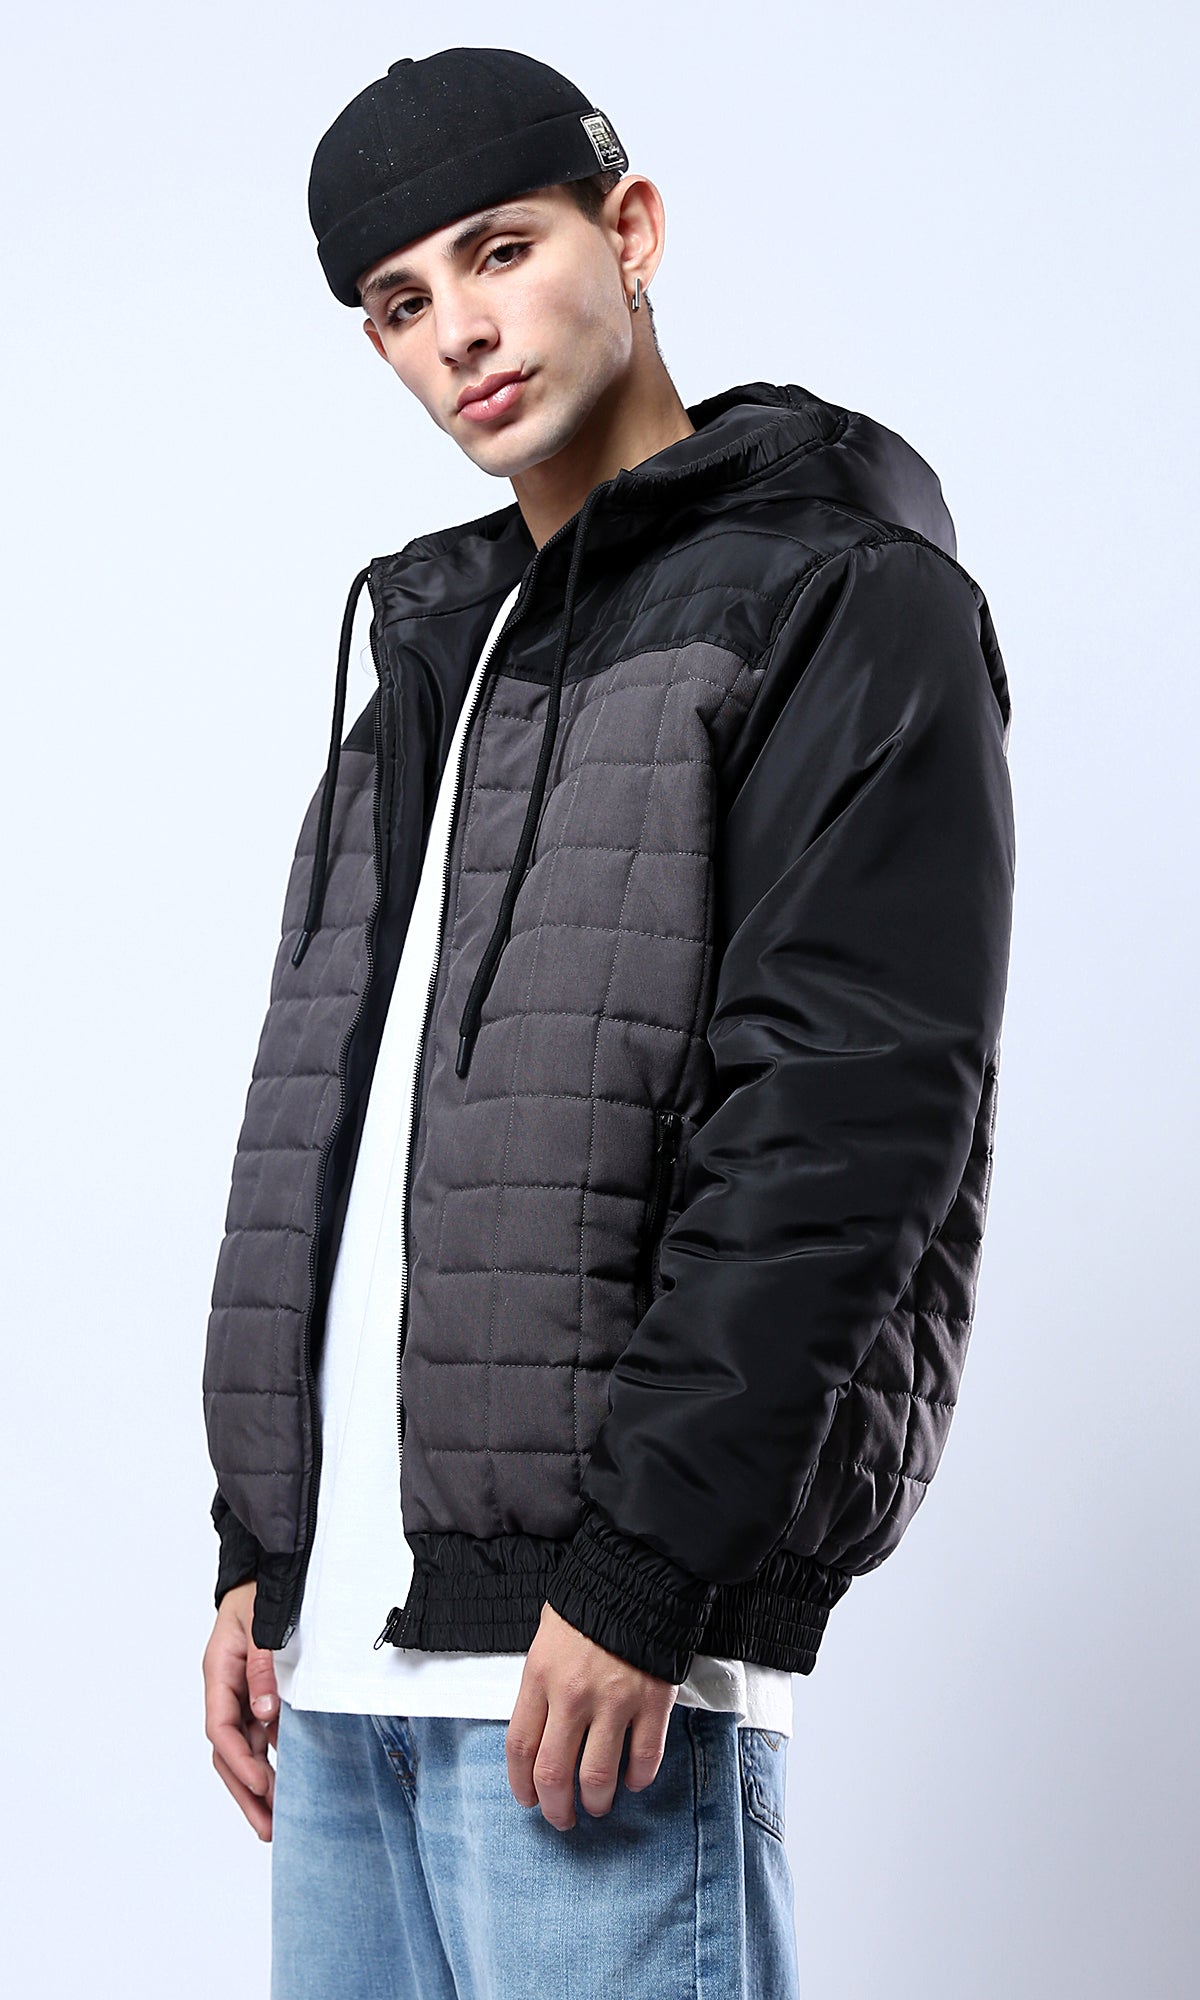 O175348 Bi-Tone Grey & Black Quilted Zipped Jacket